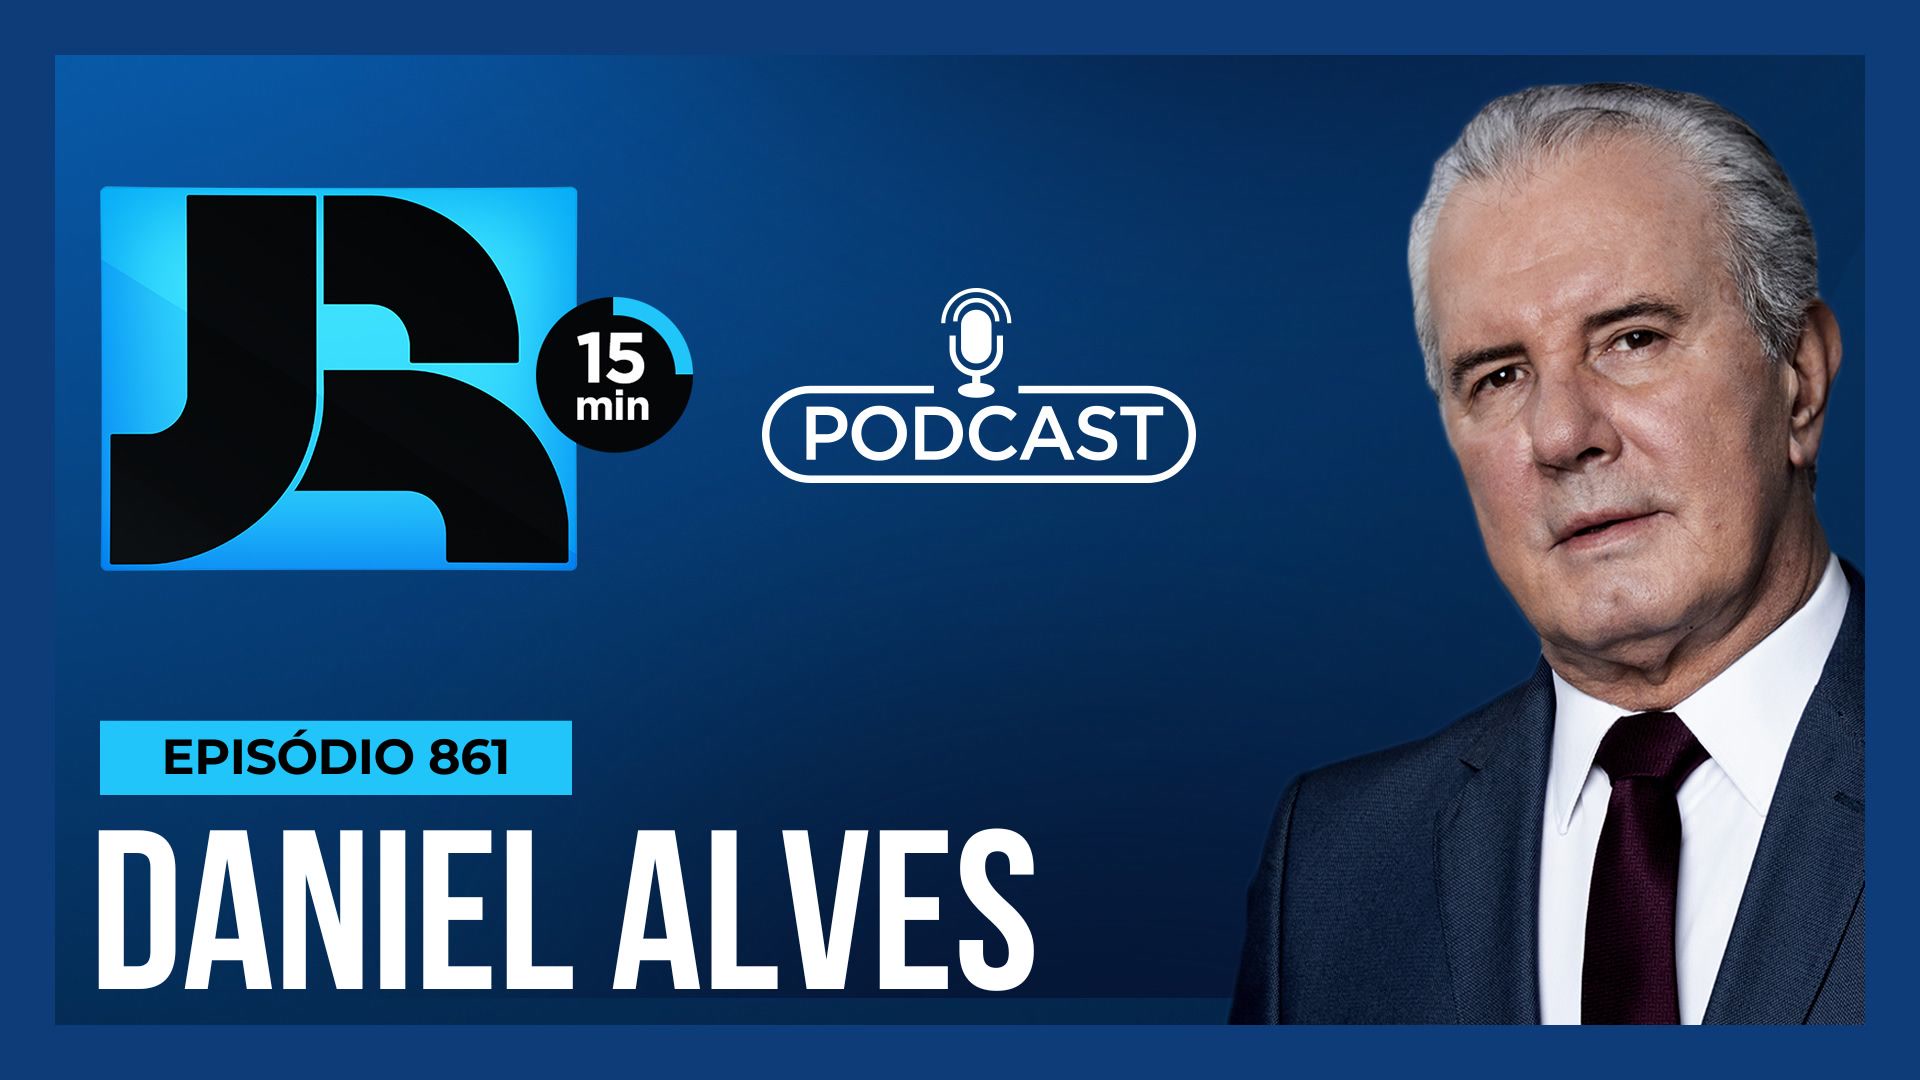 Vídeo: Podcast JR 15 Min #861 |Condenado: como será o futuro de Daniel Alves?